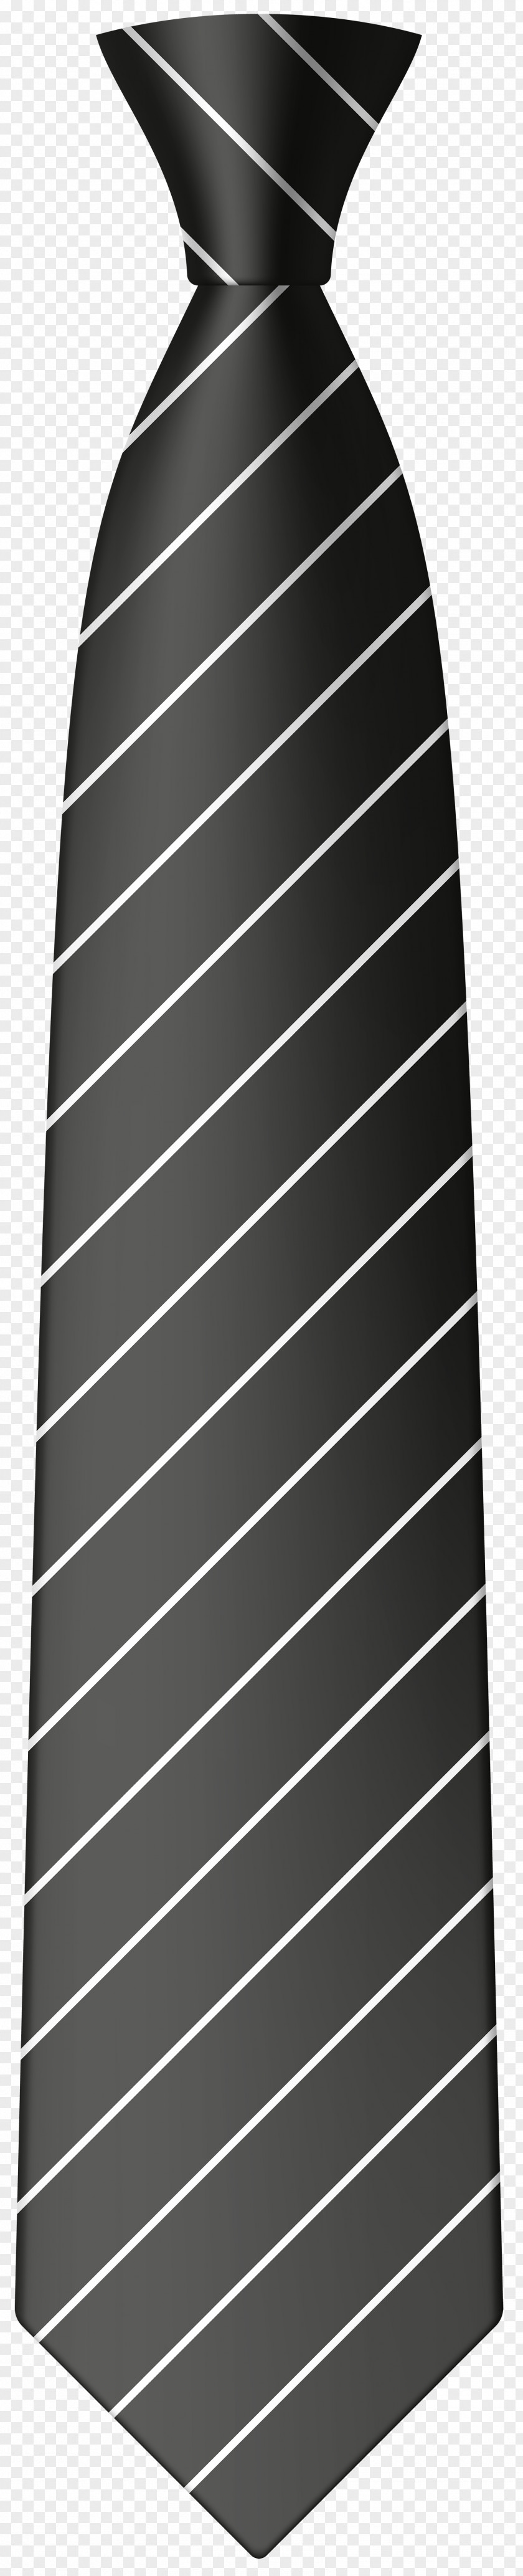 Black Tie Clip Art Image Necktie Bow PNG